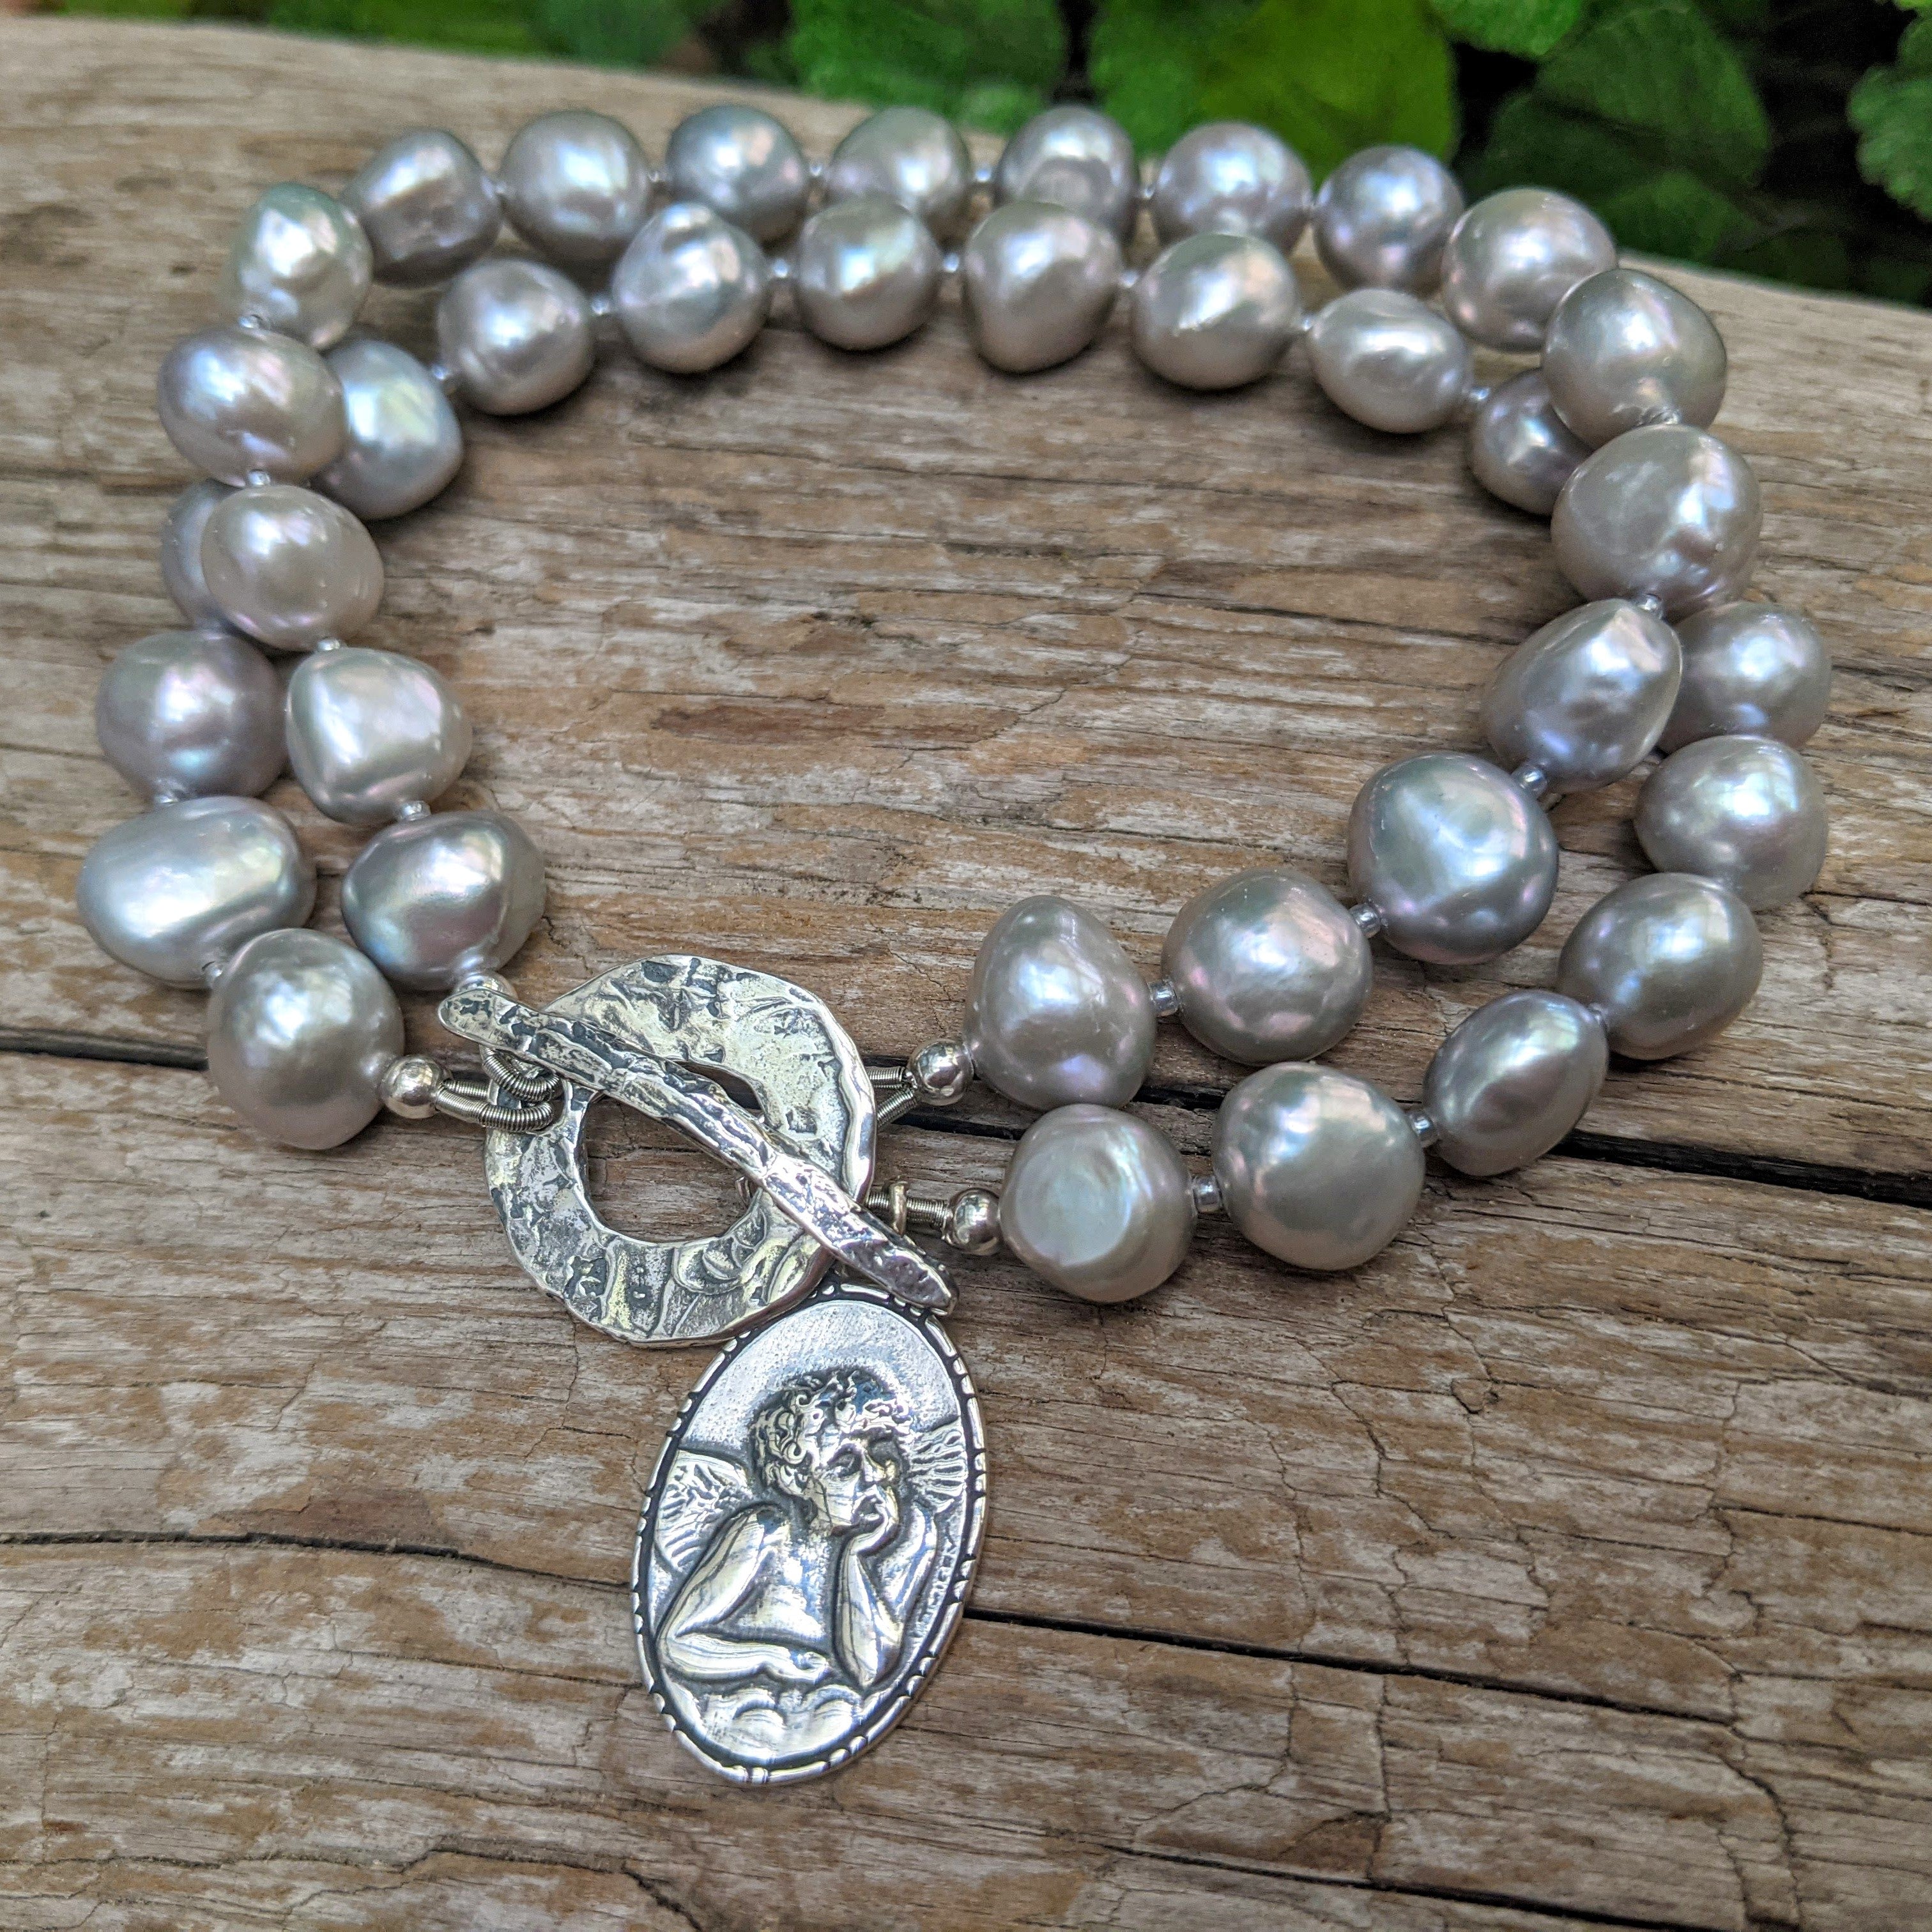 Grey pearl bracelet, Statement pearl bracelet. Boho pearl bracelet. Angel Cherub Rafael charm bracelet. Artisan , artistic pearl jewelry. Handcrafted by Aurora Creative Jewellery.  